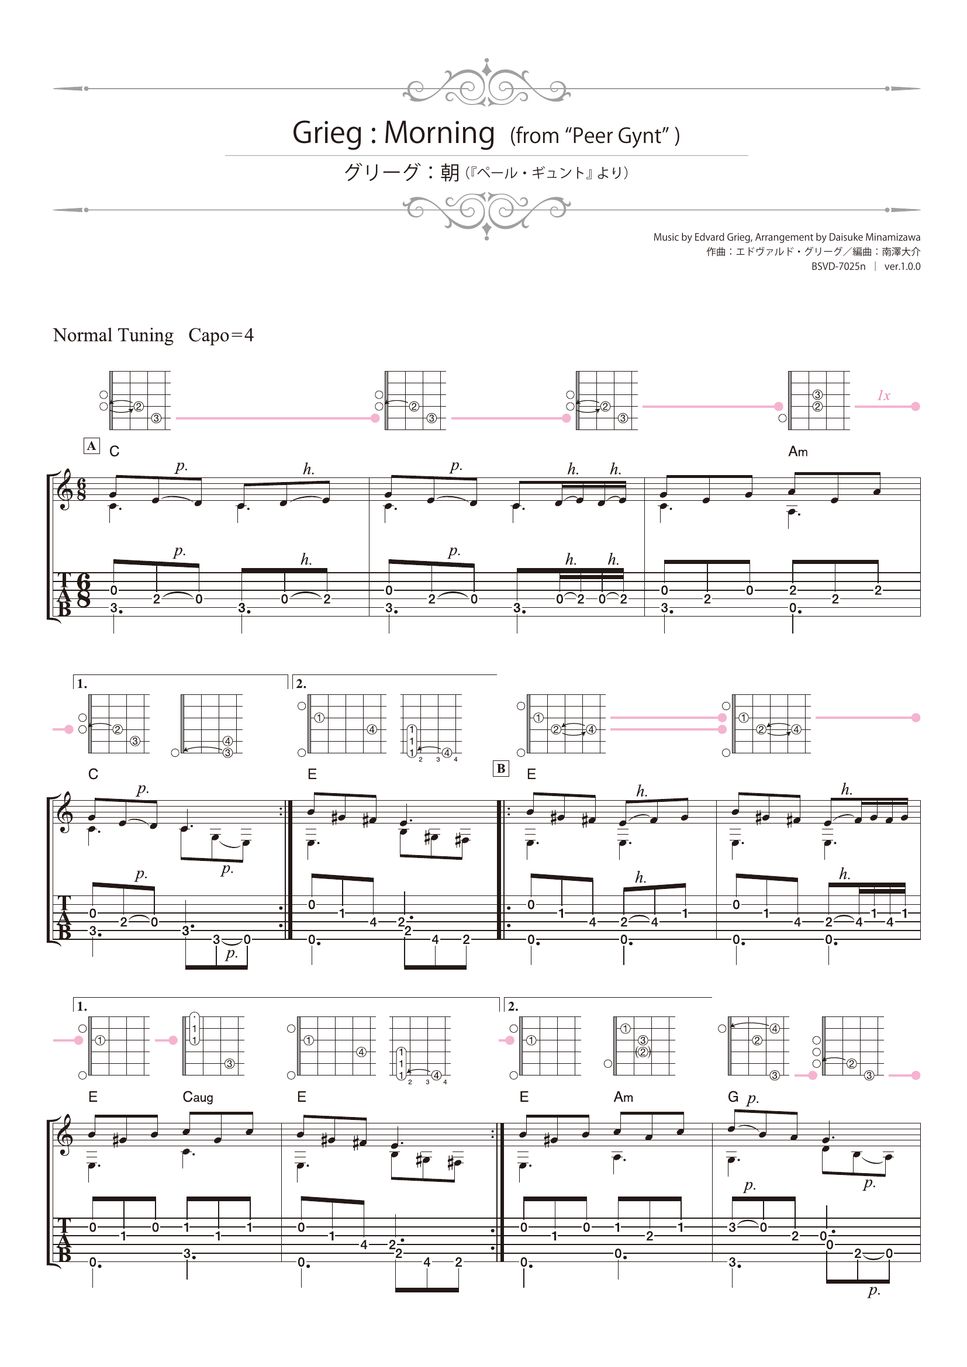 Grieg - Morning (from "Peer Gynt") (Solo Guitar) by Daisuke Minamizawa